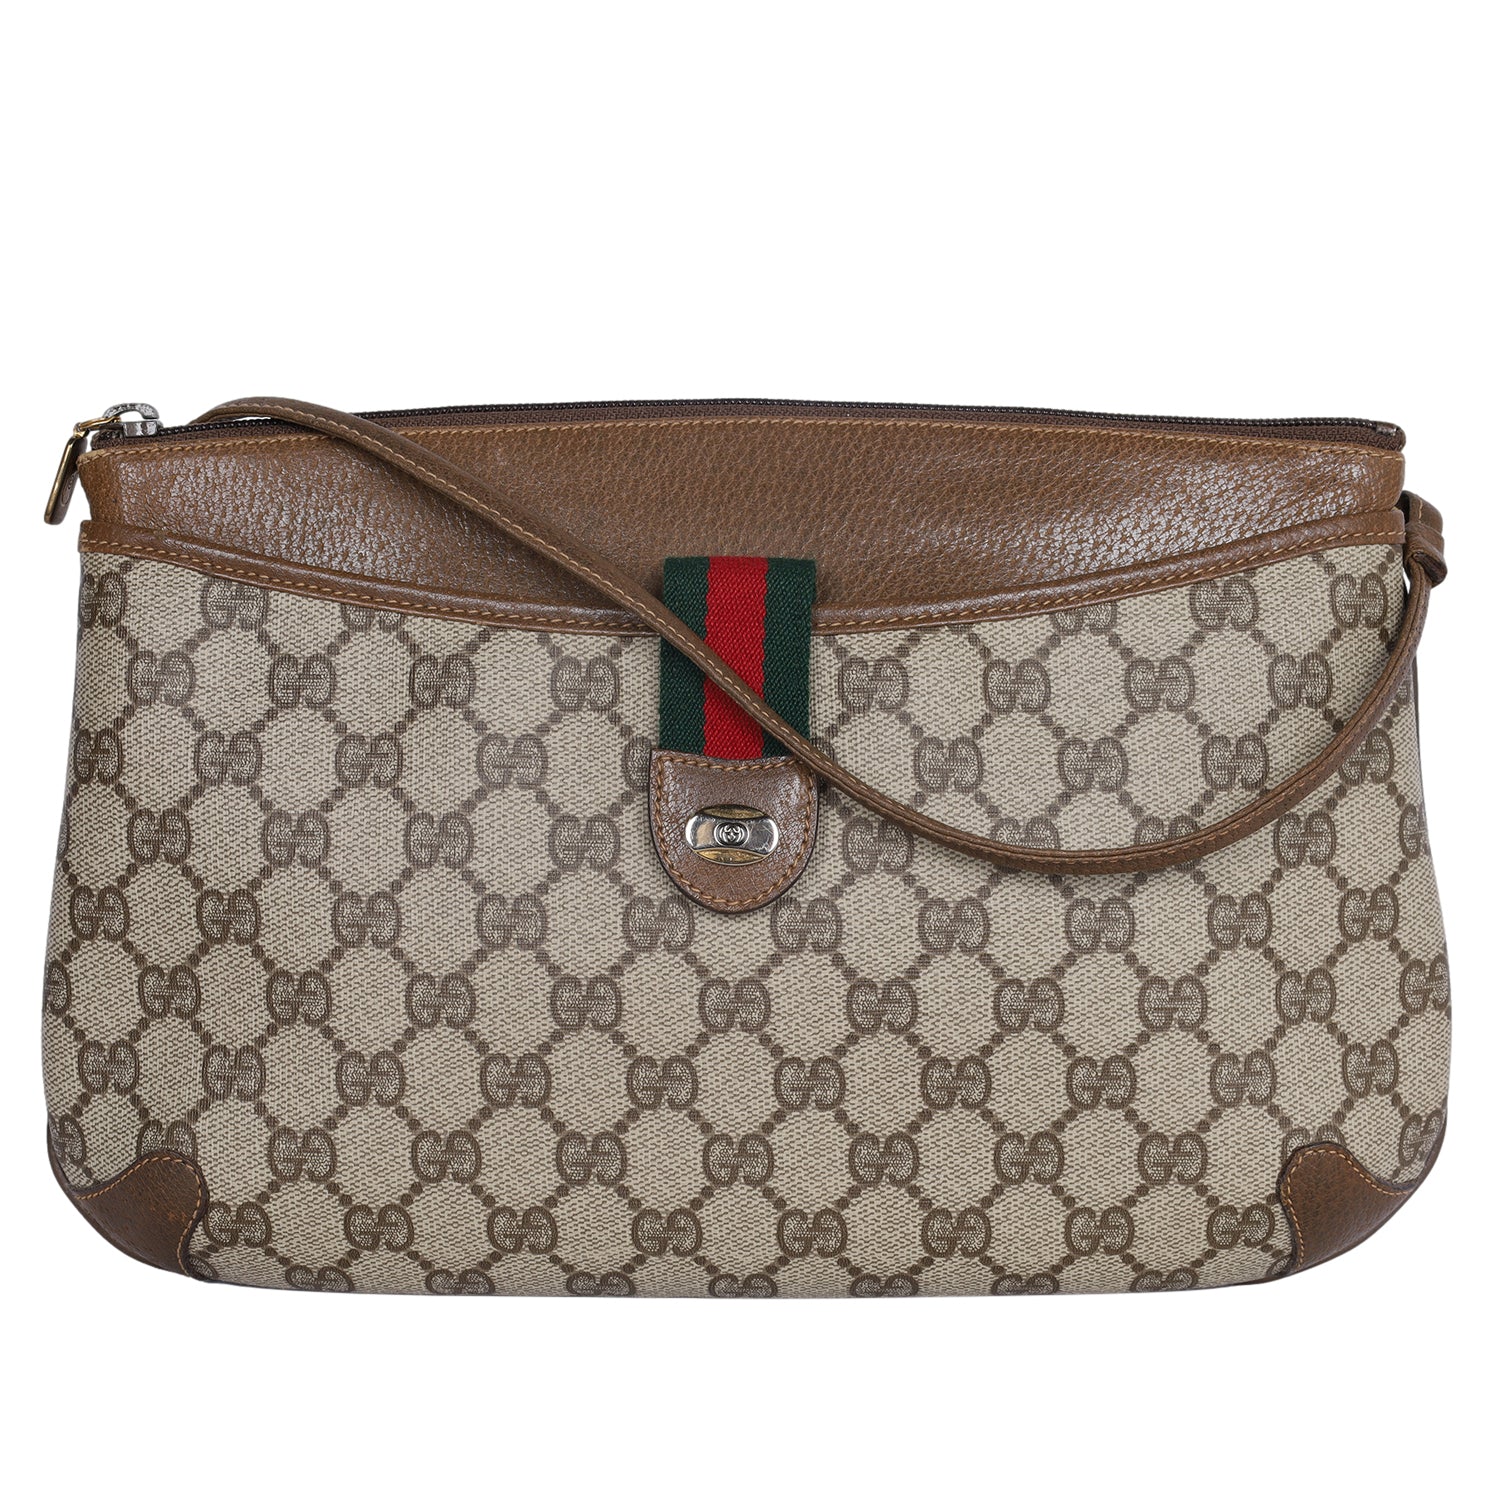 Gucci, Bags, Authentic Gucci Vintage Leather Bag